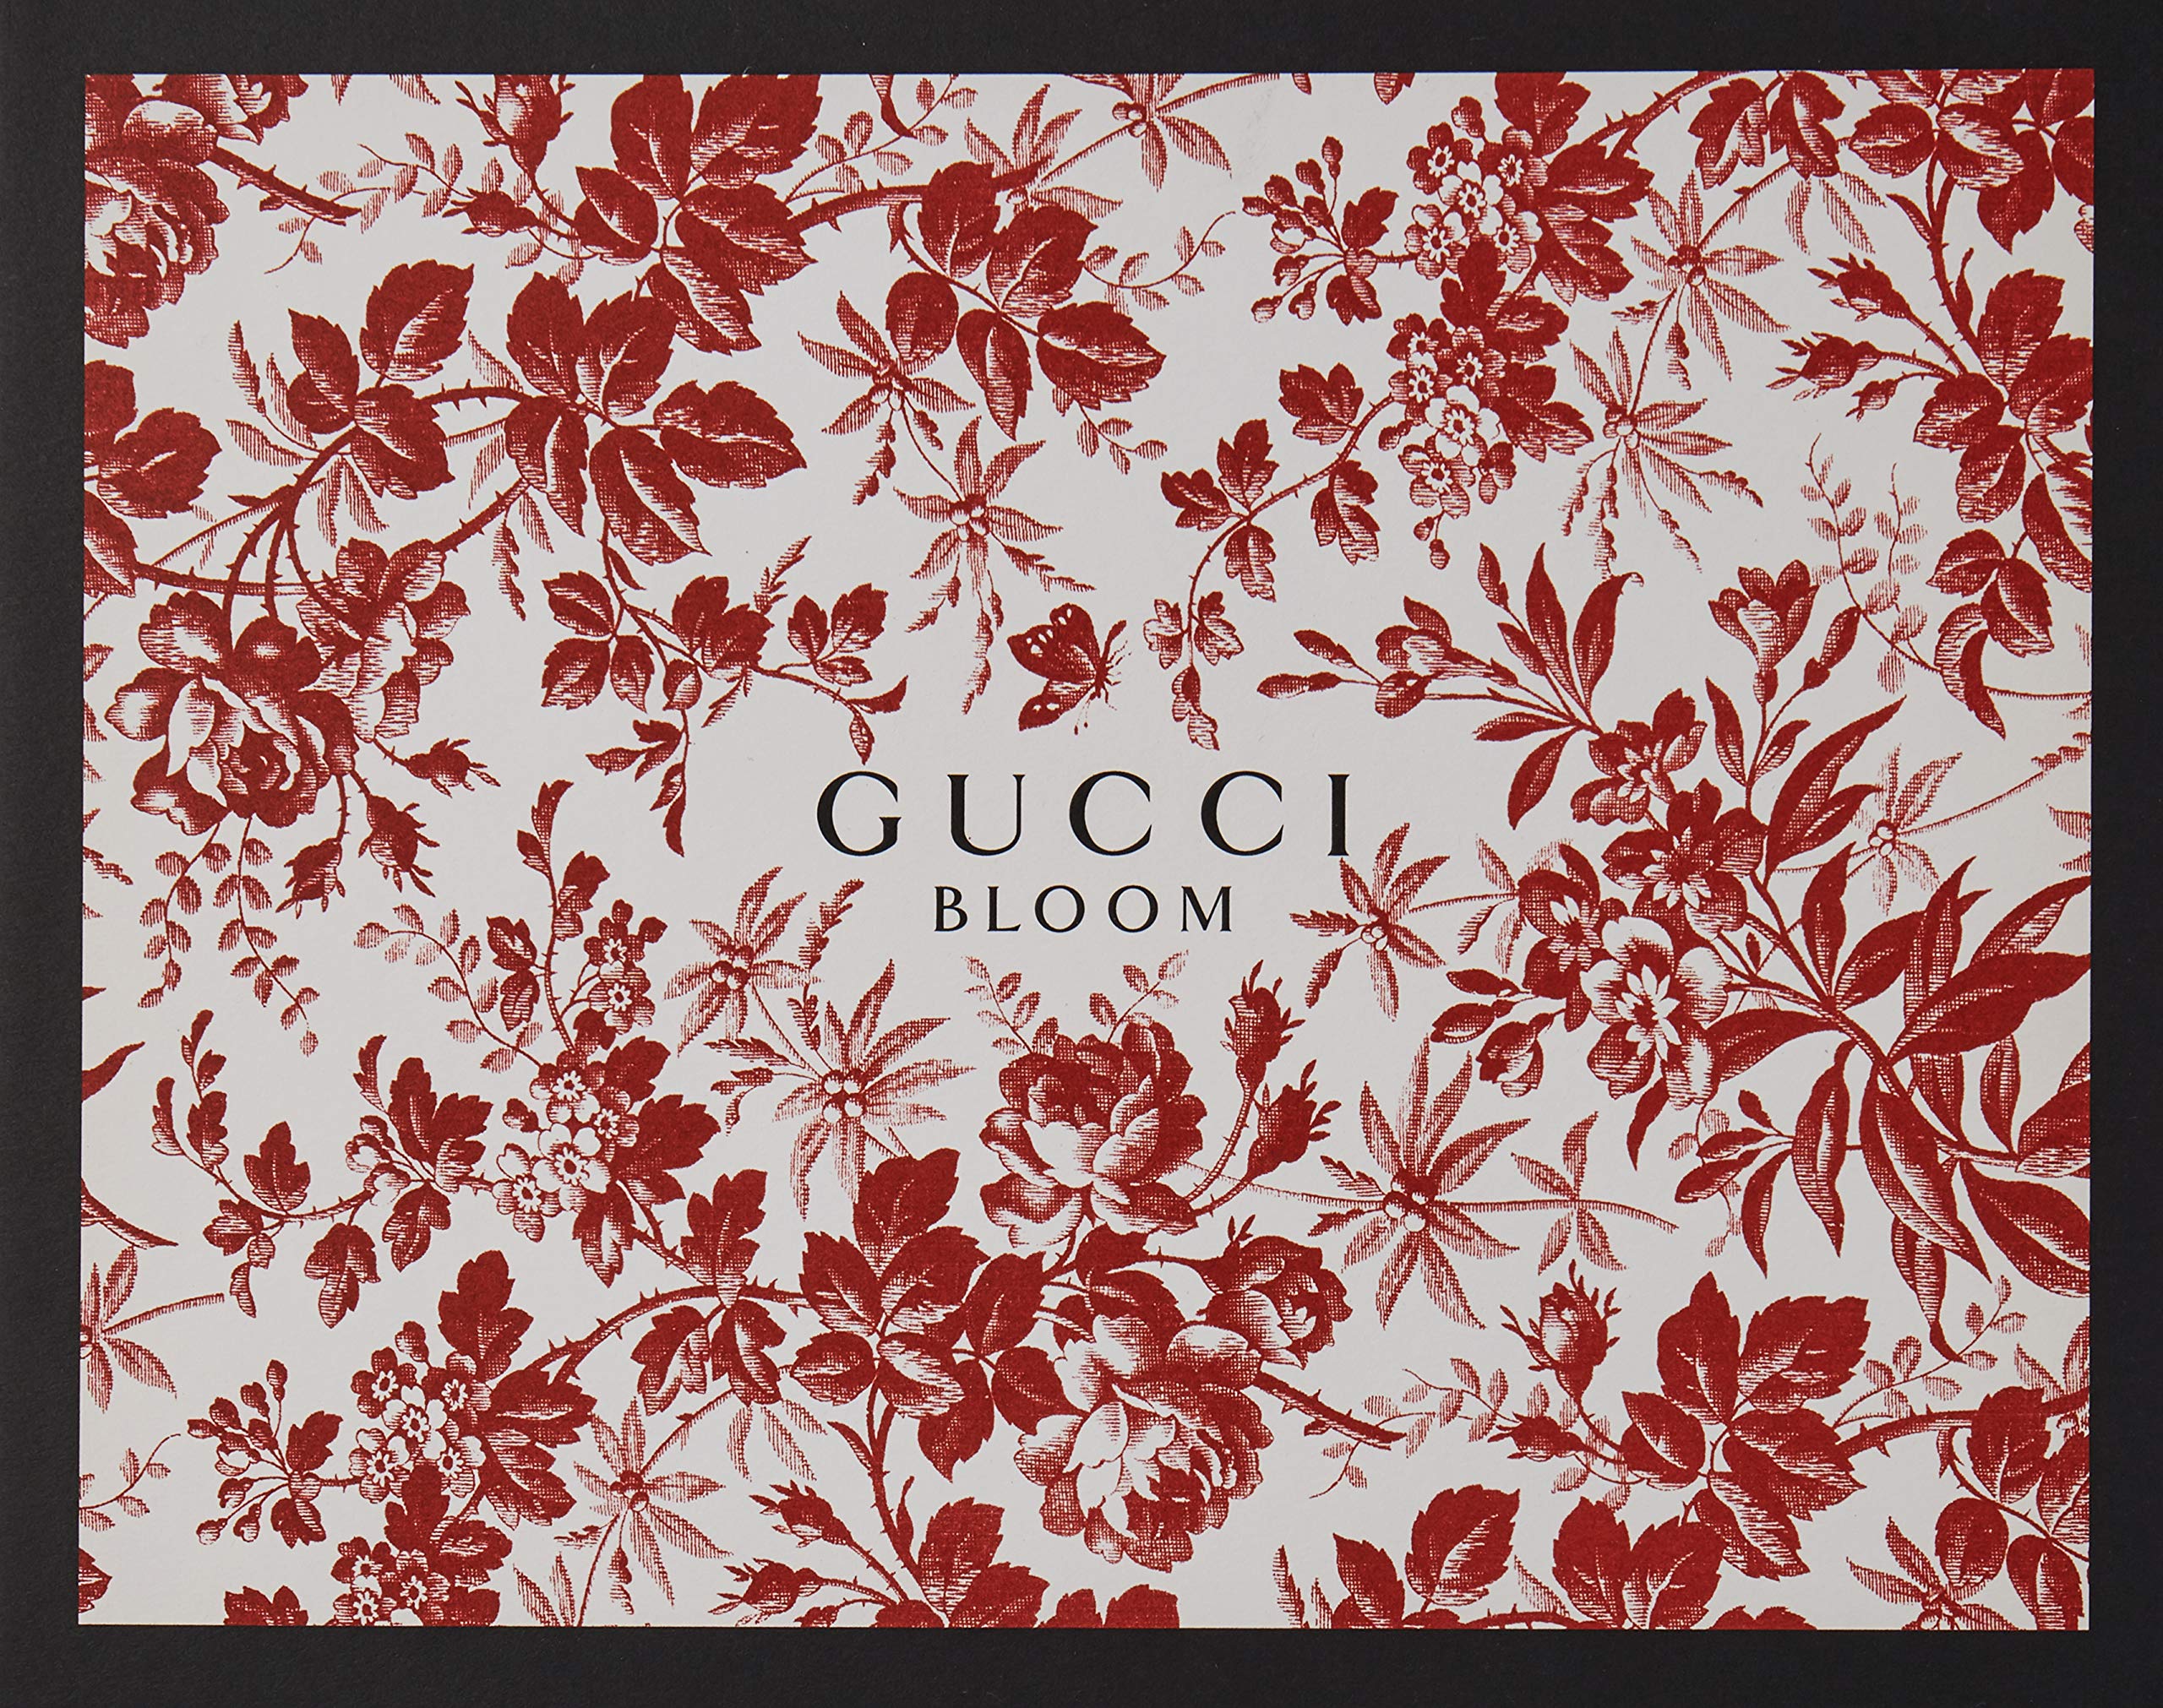 Gucci 3 Piece Bloom Eau de Parfum Spray Gift Set for Women